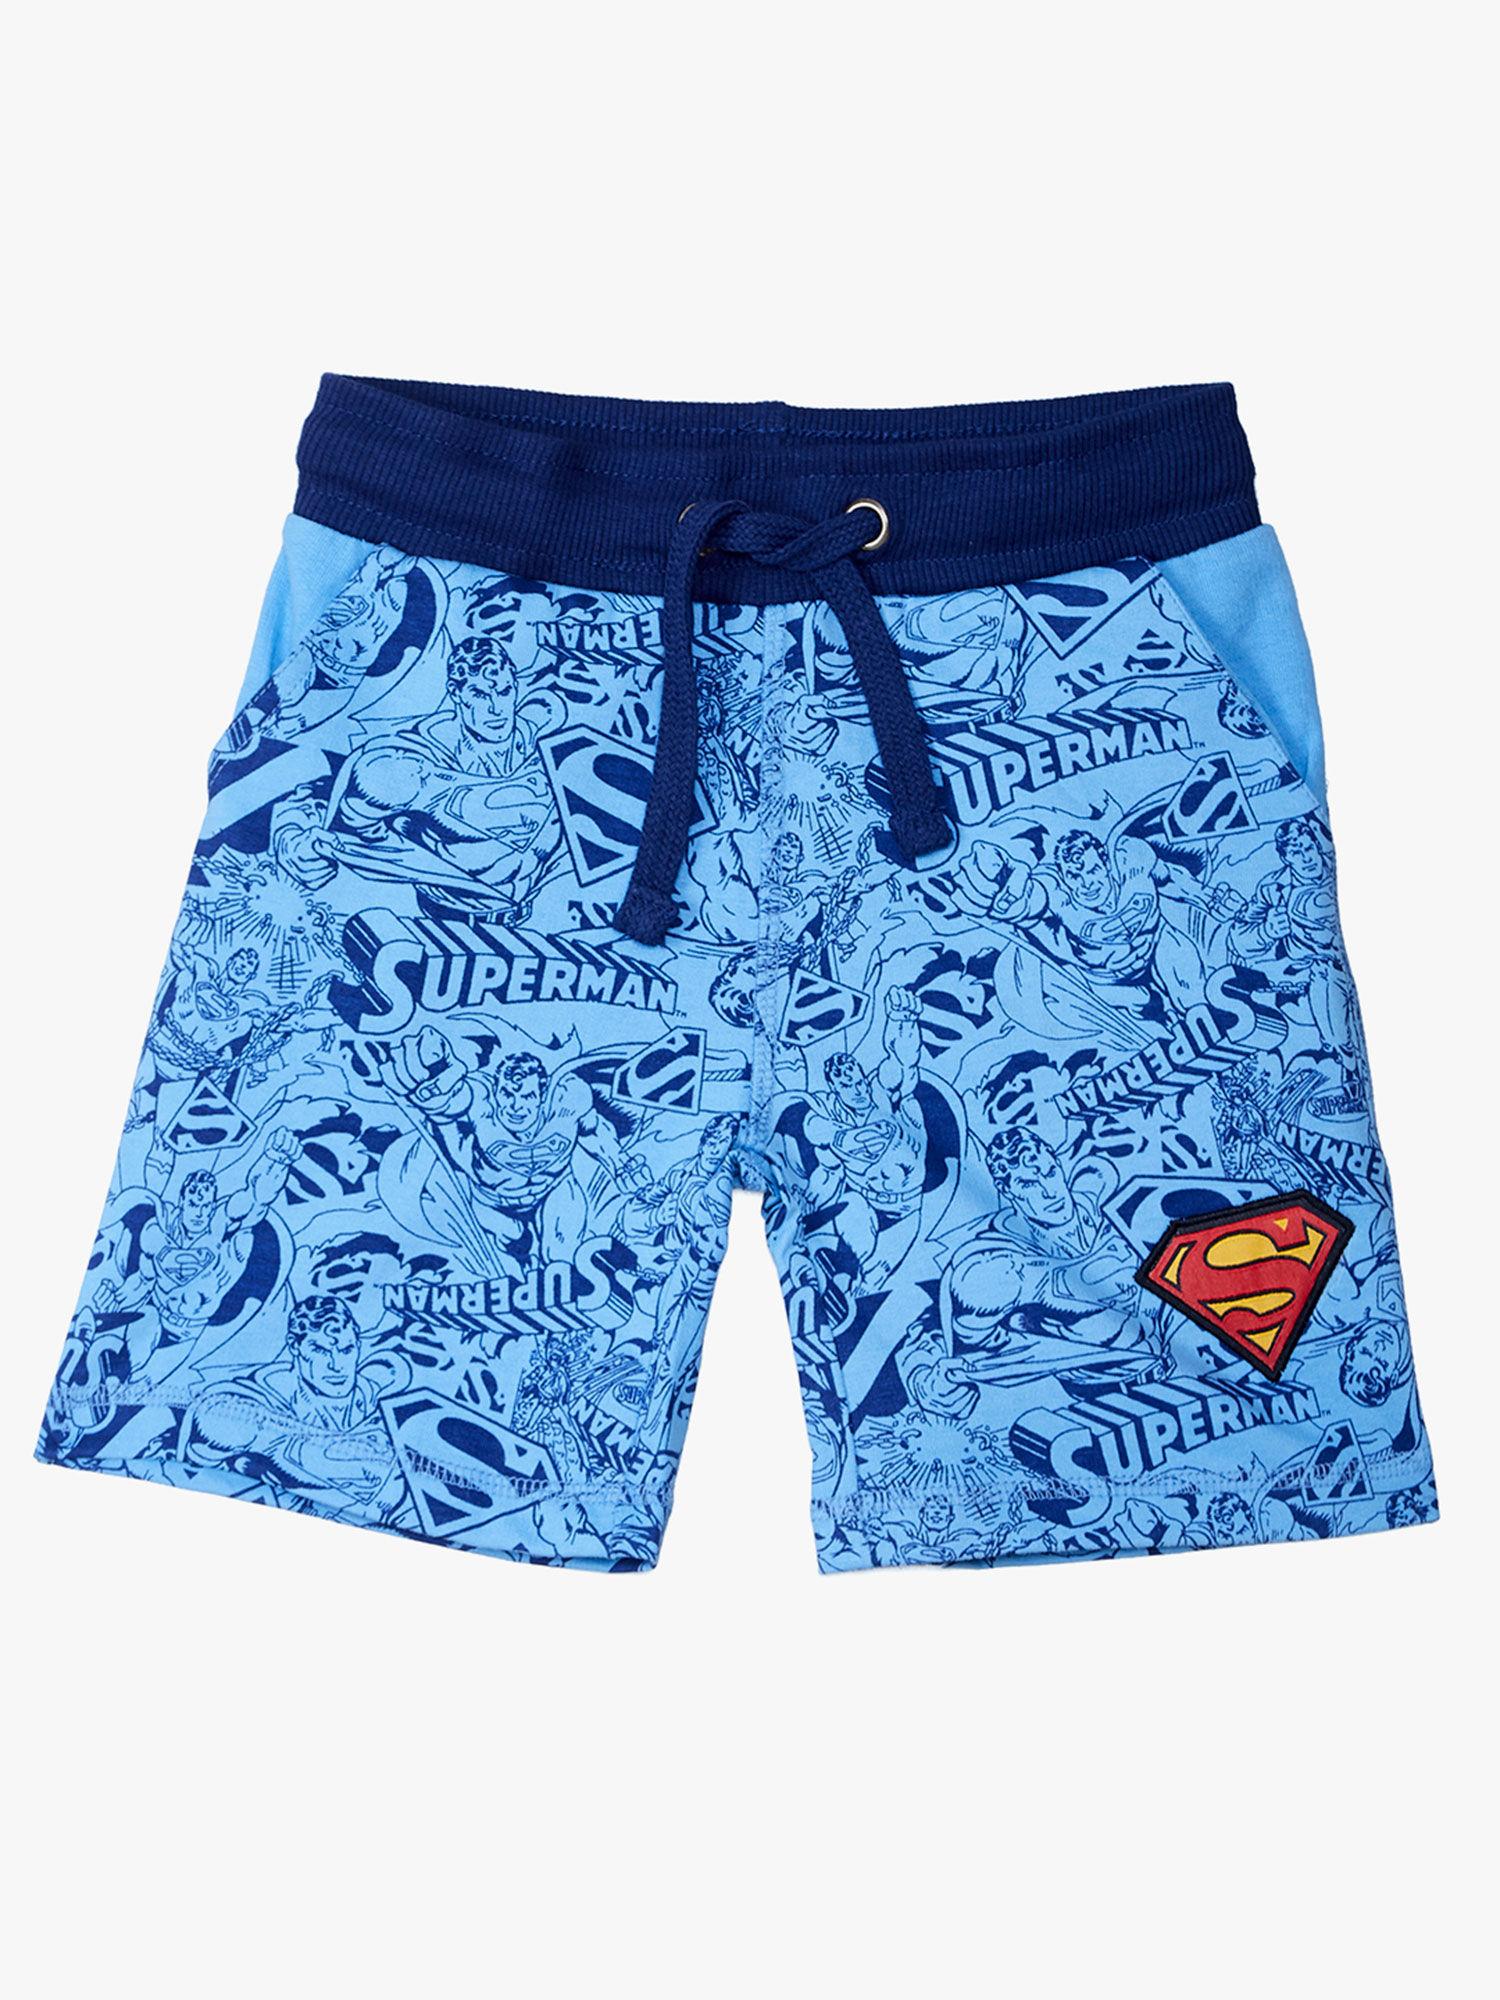 superman-blue-shorts